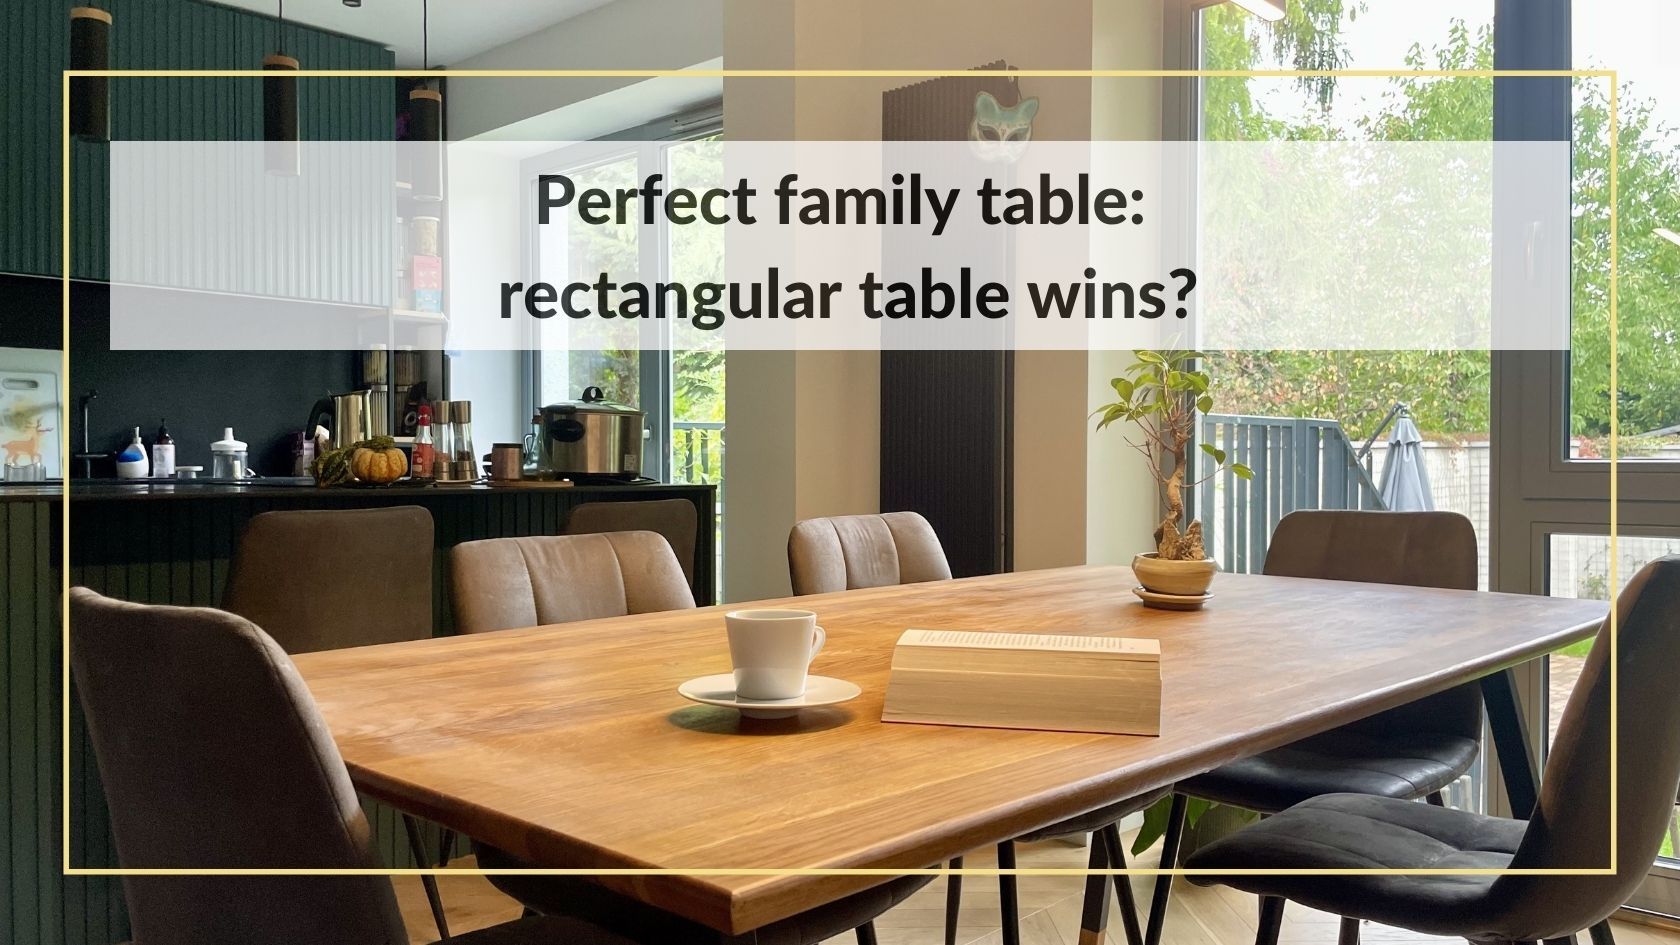 Rectangular dining table adnvantages - banner